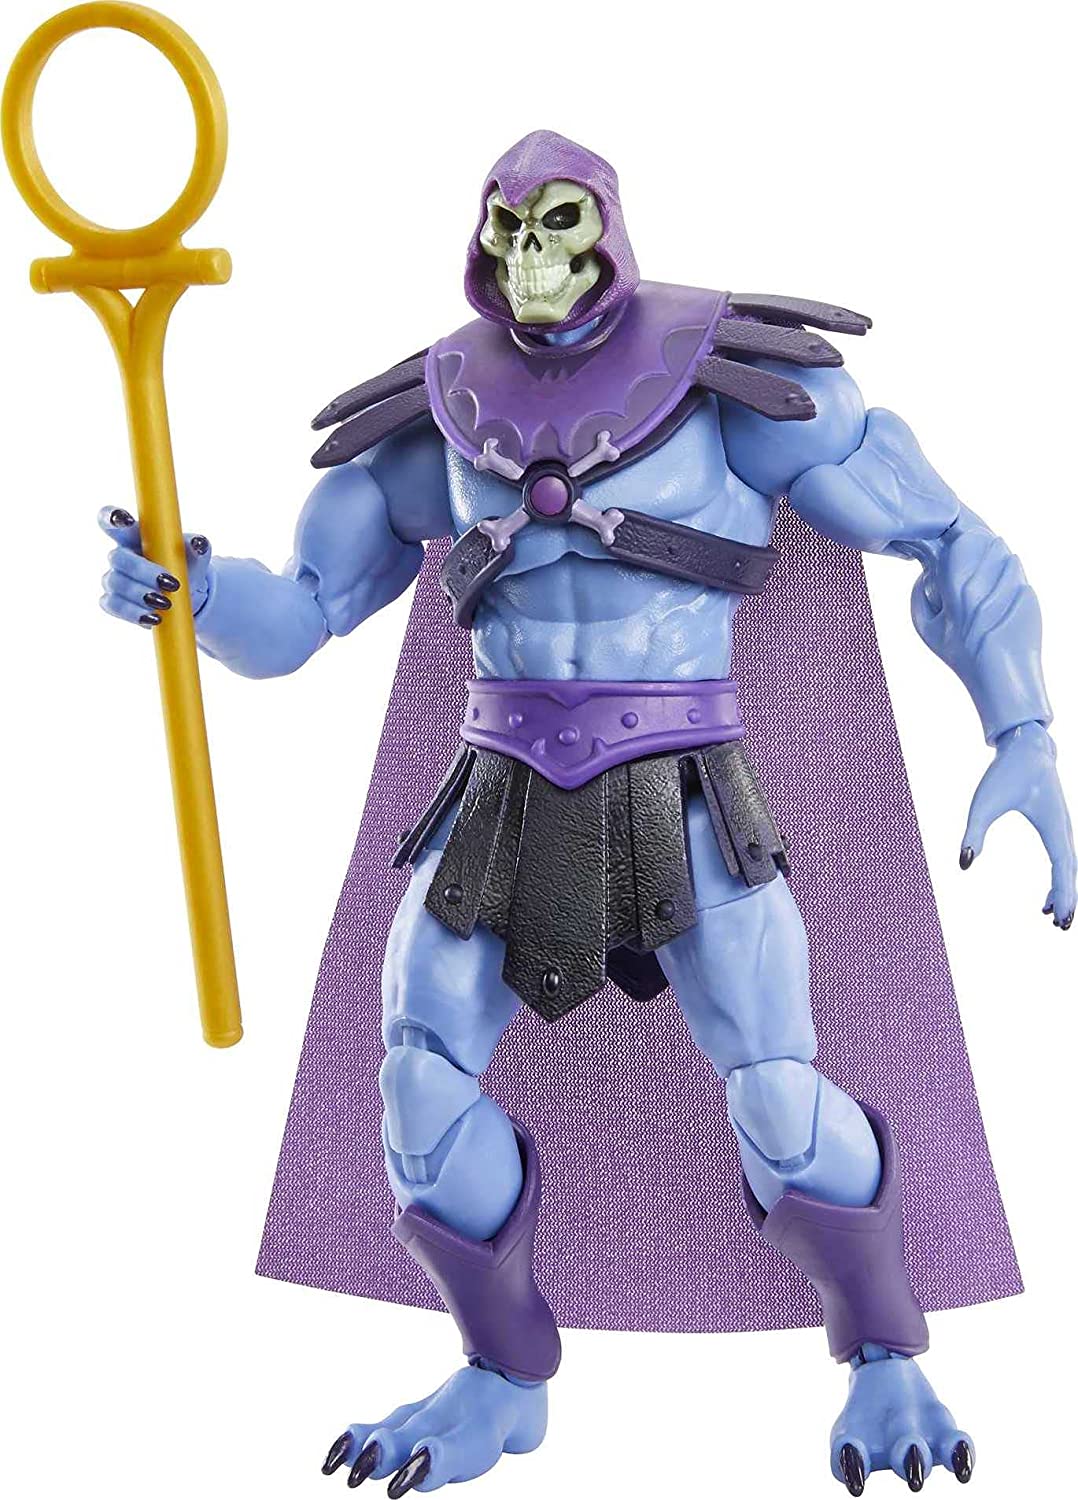 Masters of the Universe Masterverse Revelation Skeletor Actionfigur